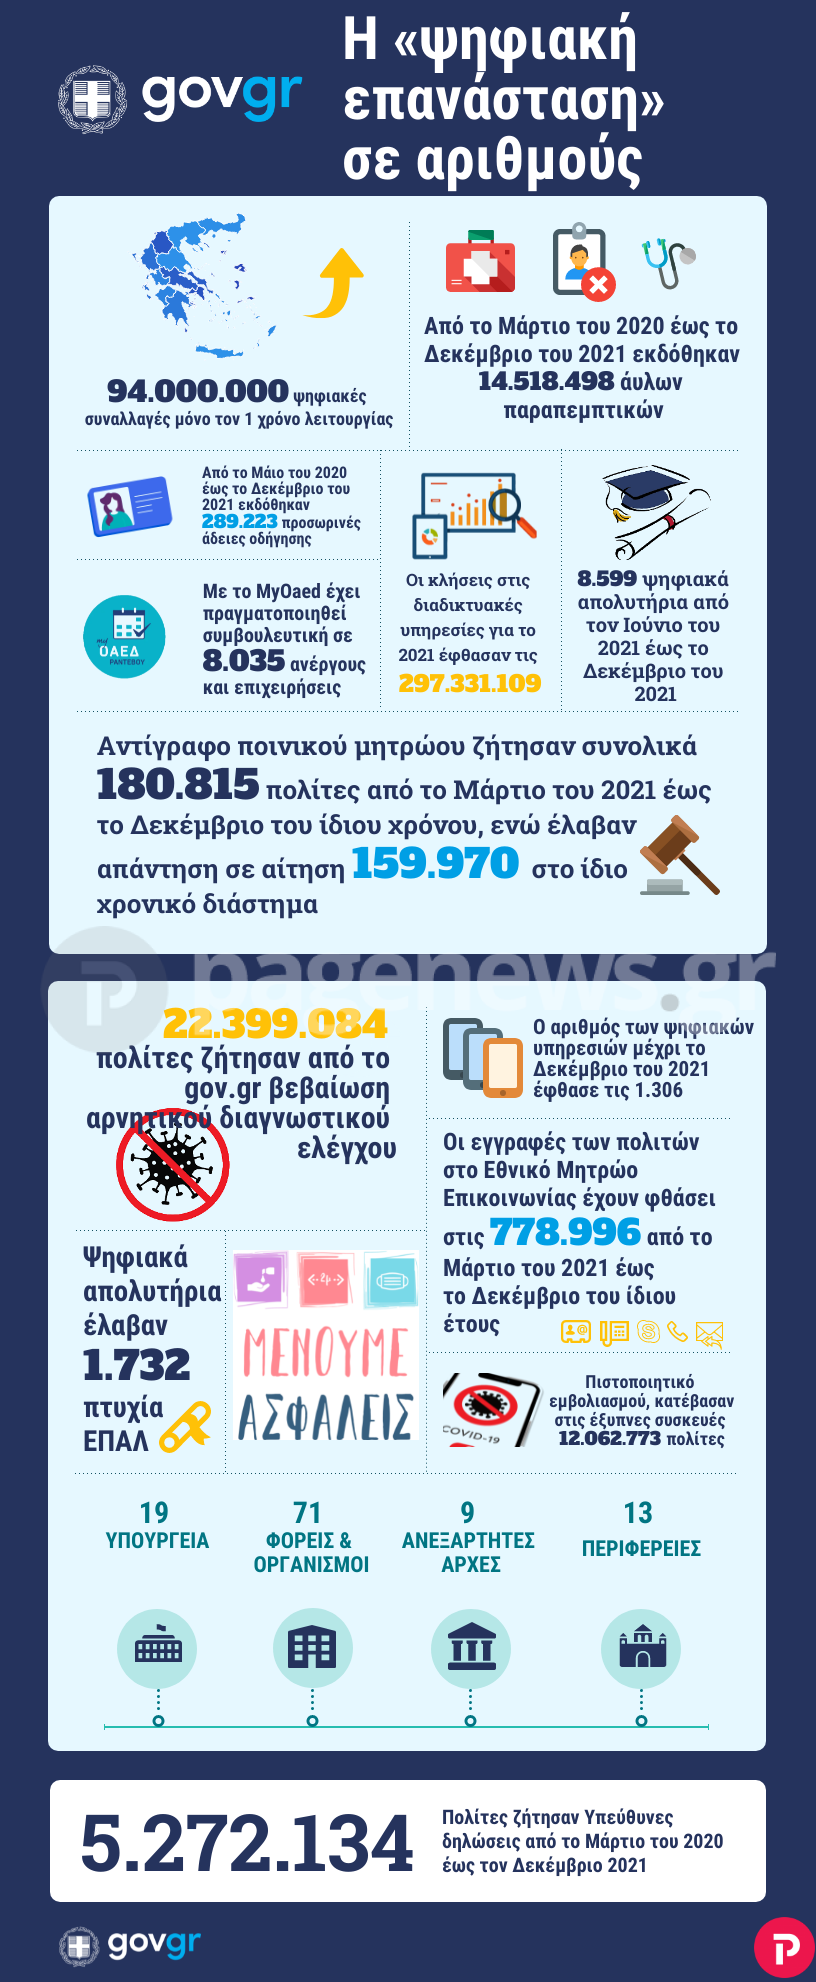 Gov.gr: Η «ψηφιακή επανάσταση» που άλλαξε την σχέση των πολιτών με το Δημόσιο [Infographic]